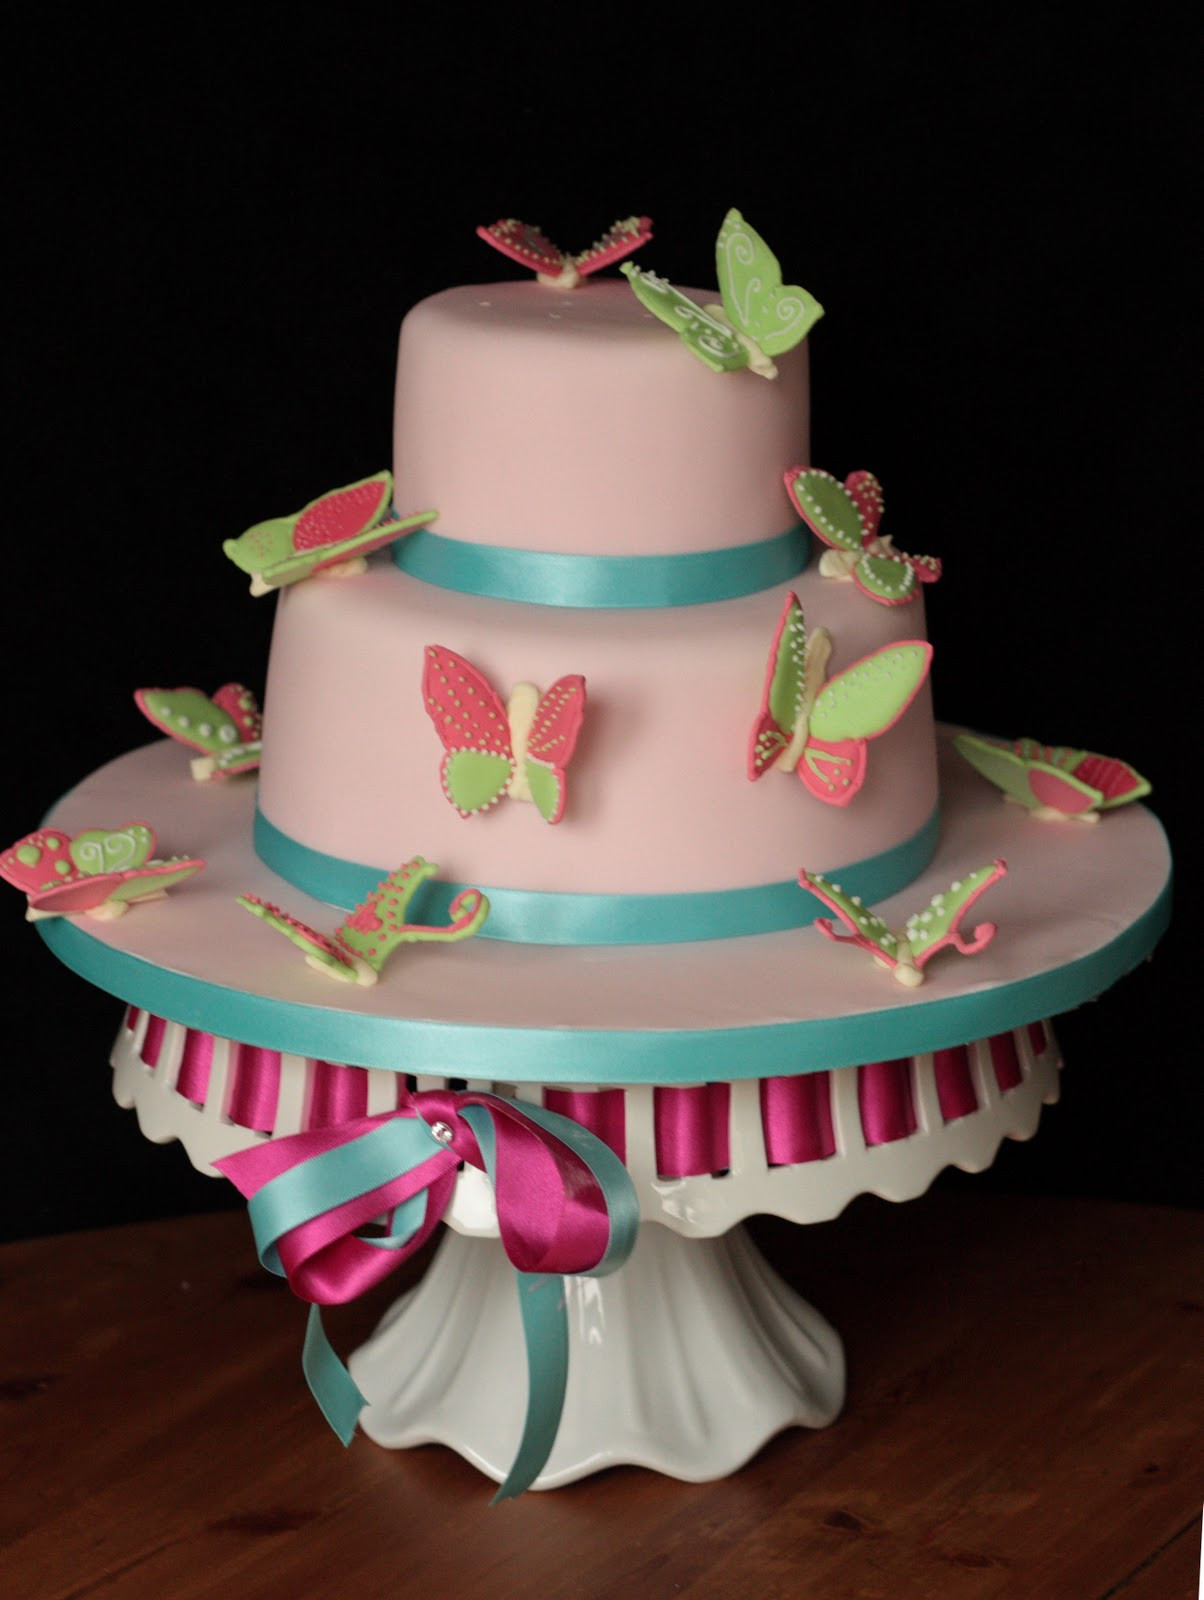 Butterfly Birthday Cakes
 Vanilla Butterfly Birthday Cake